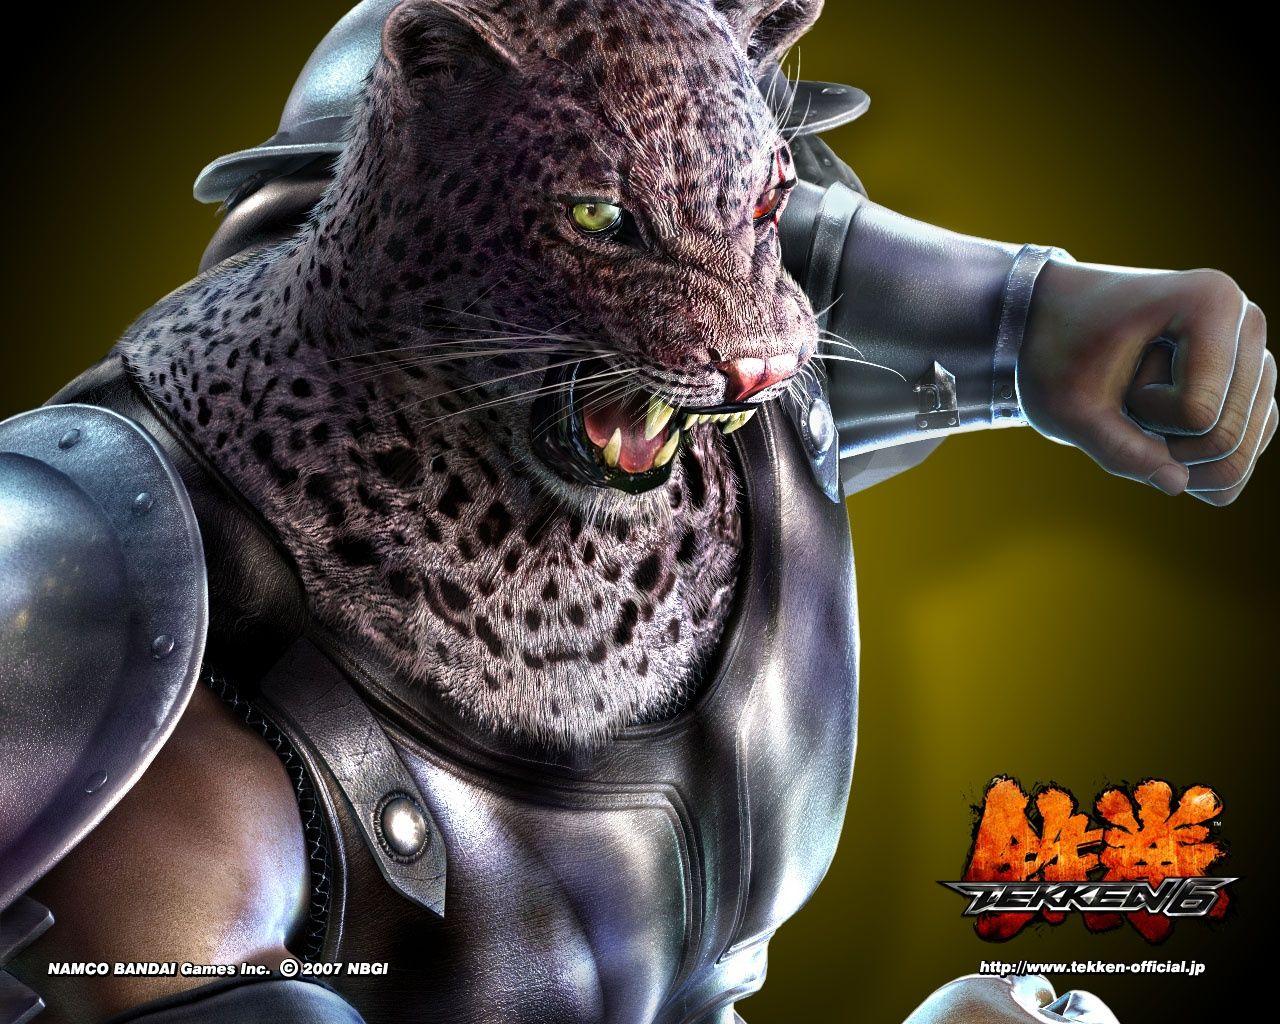 Armor King Tekken 6 Wallpaper in jpg format for free download